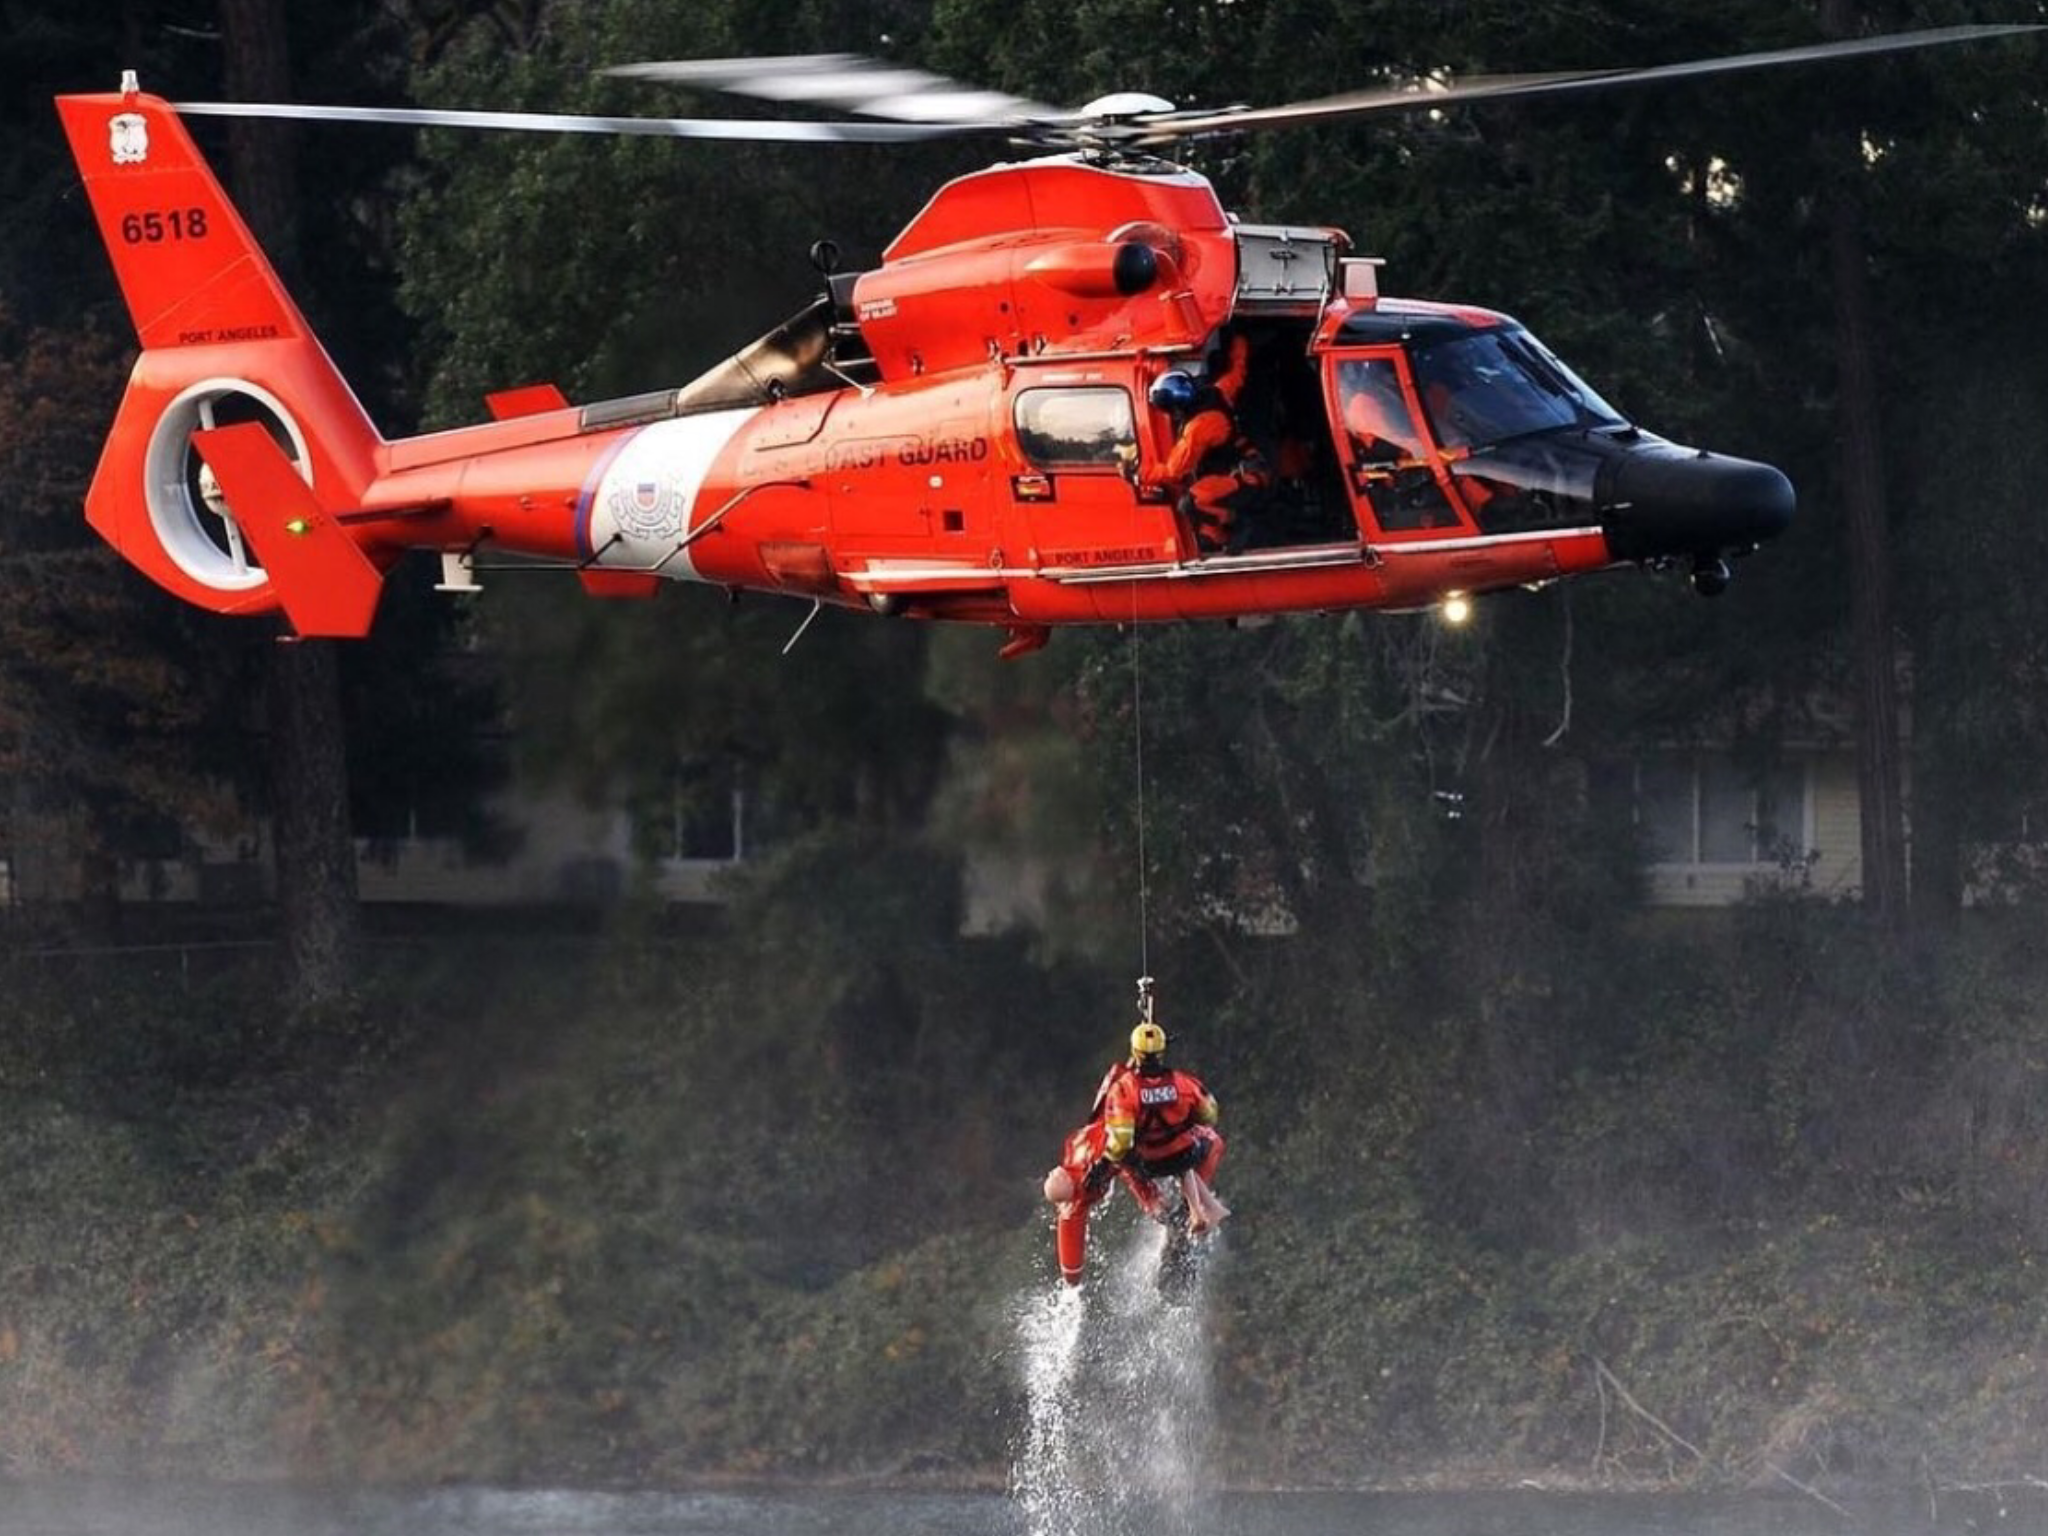 Coast Guard 6518 hoisting her Rescue Swimmer. Coast guard rescue swimmer, Coast guard rescue, Coast guard